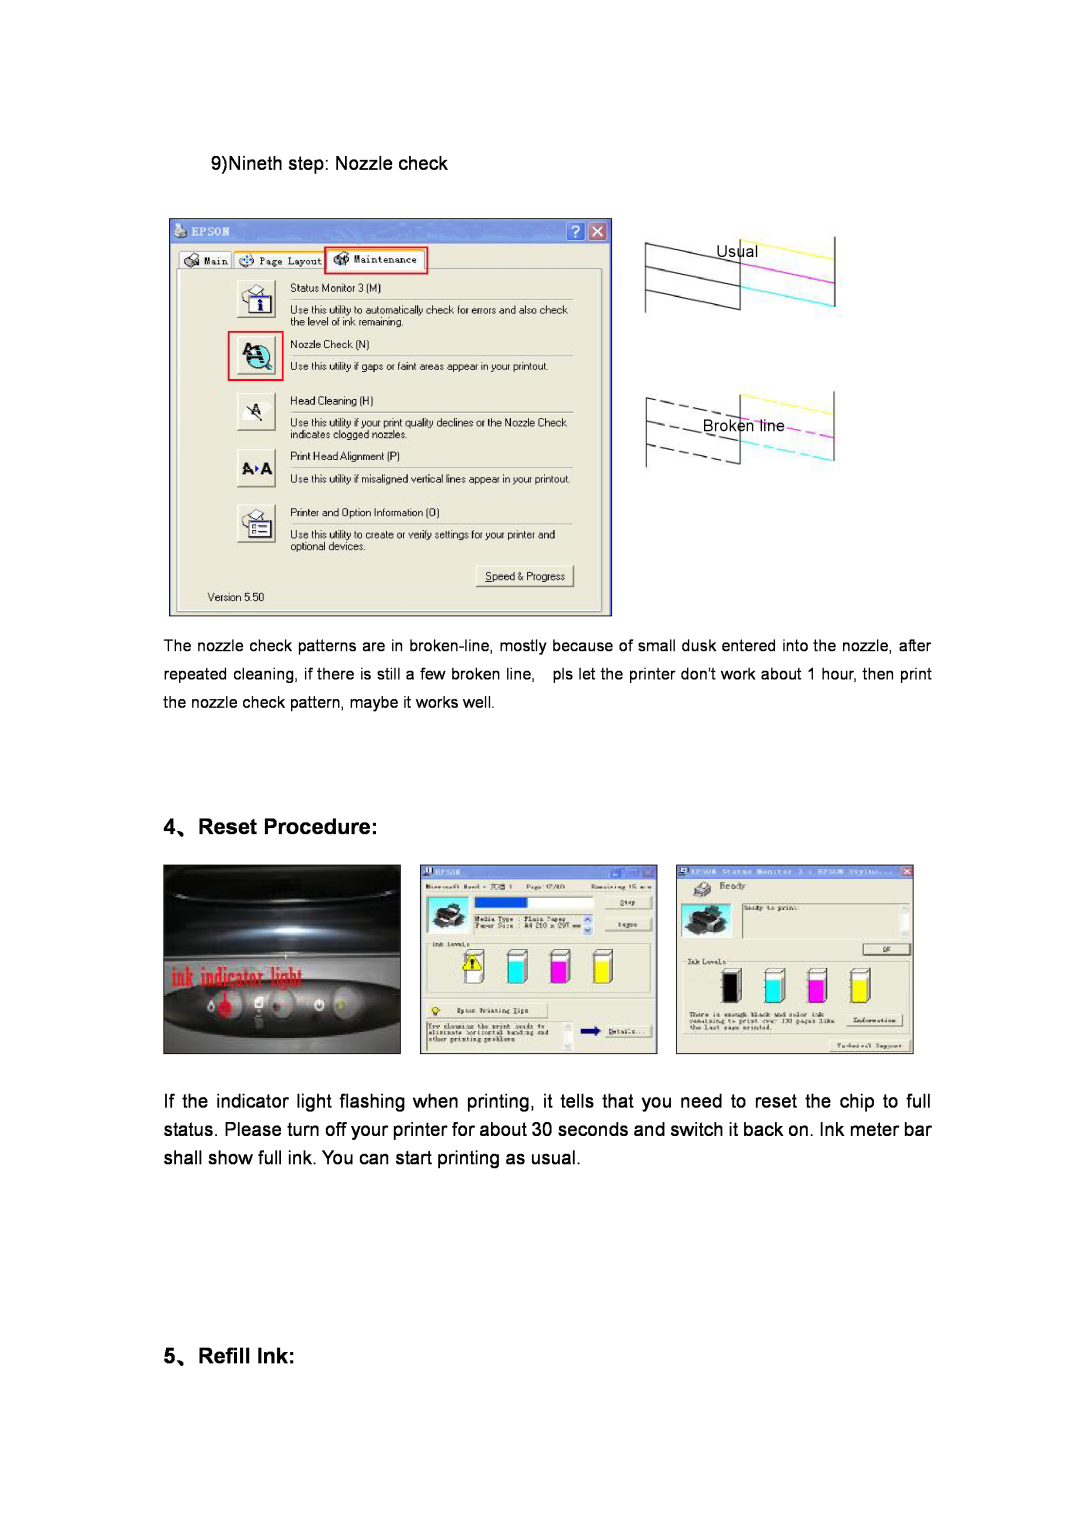 Epson C88 manual 4、Reset Procedure, 5、Refill Ink 